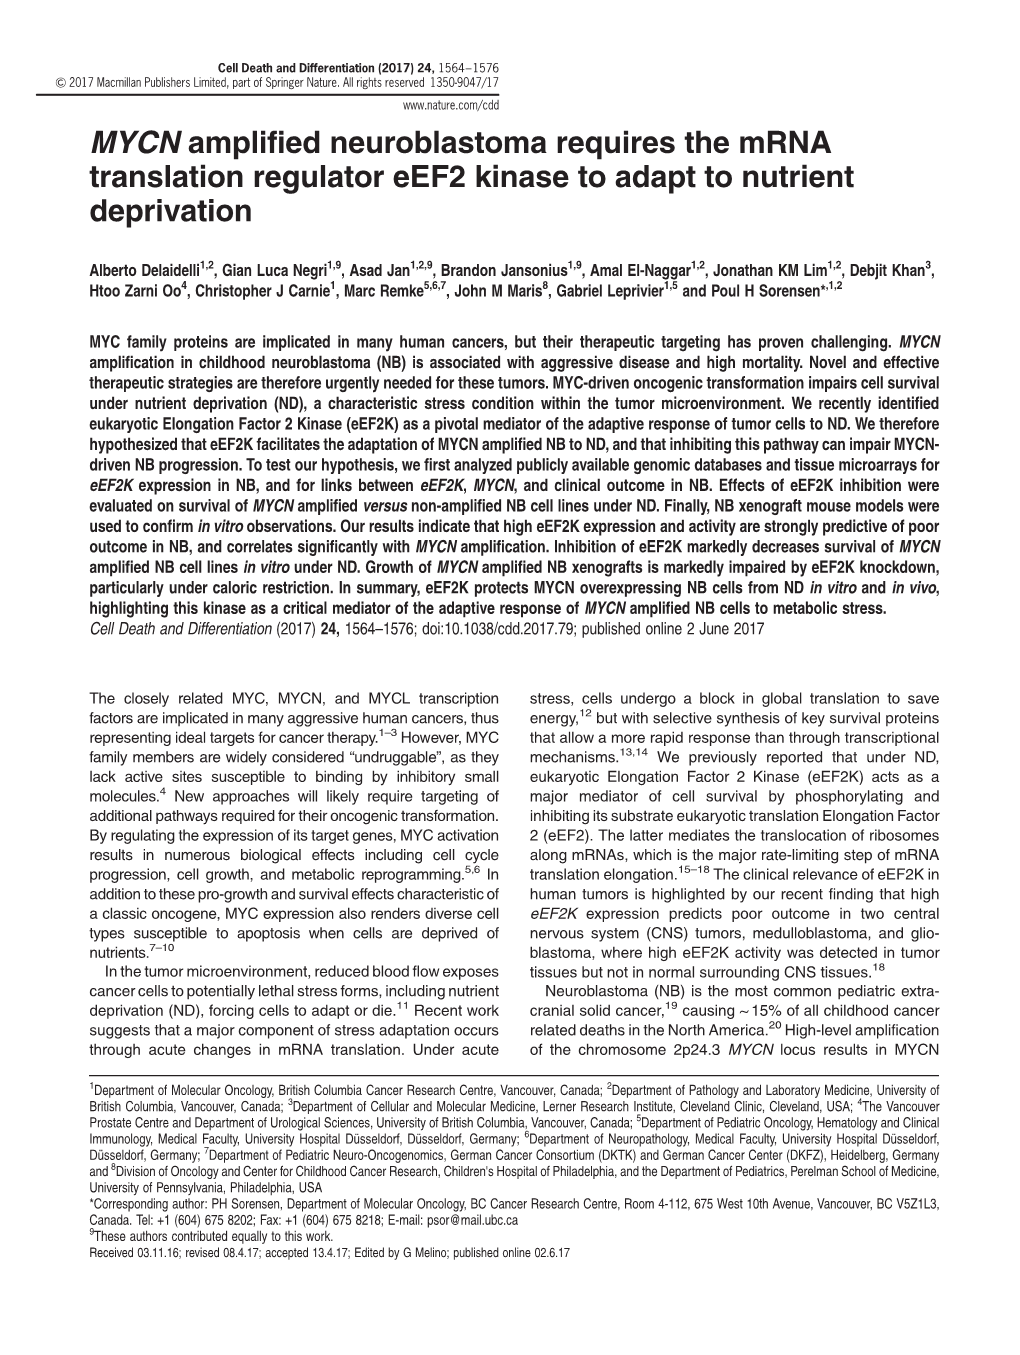 MYCN Amplified Neuroblastoma Requires the Mrna Translation Regulator Eef2 Kinase to Adapt to Nutrient Deprivation